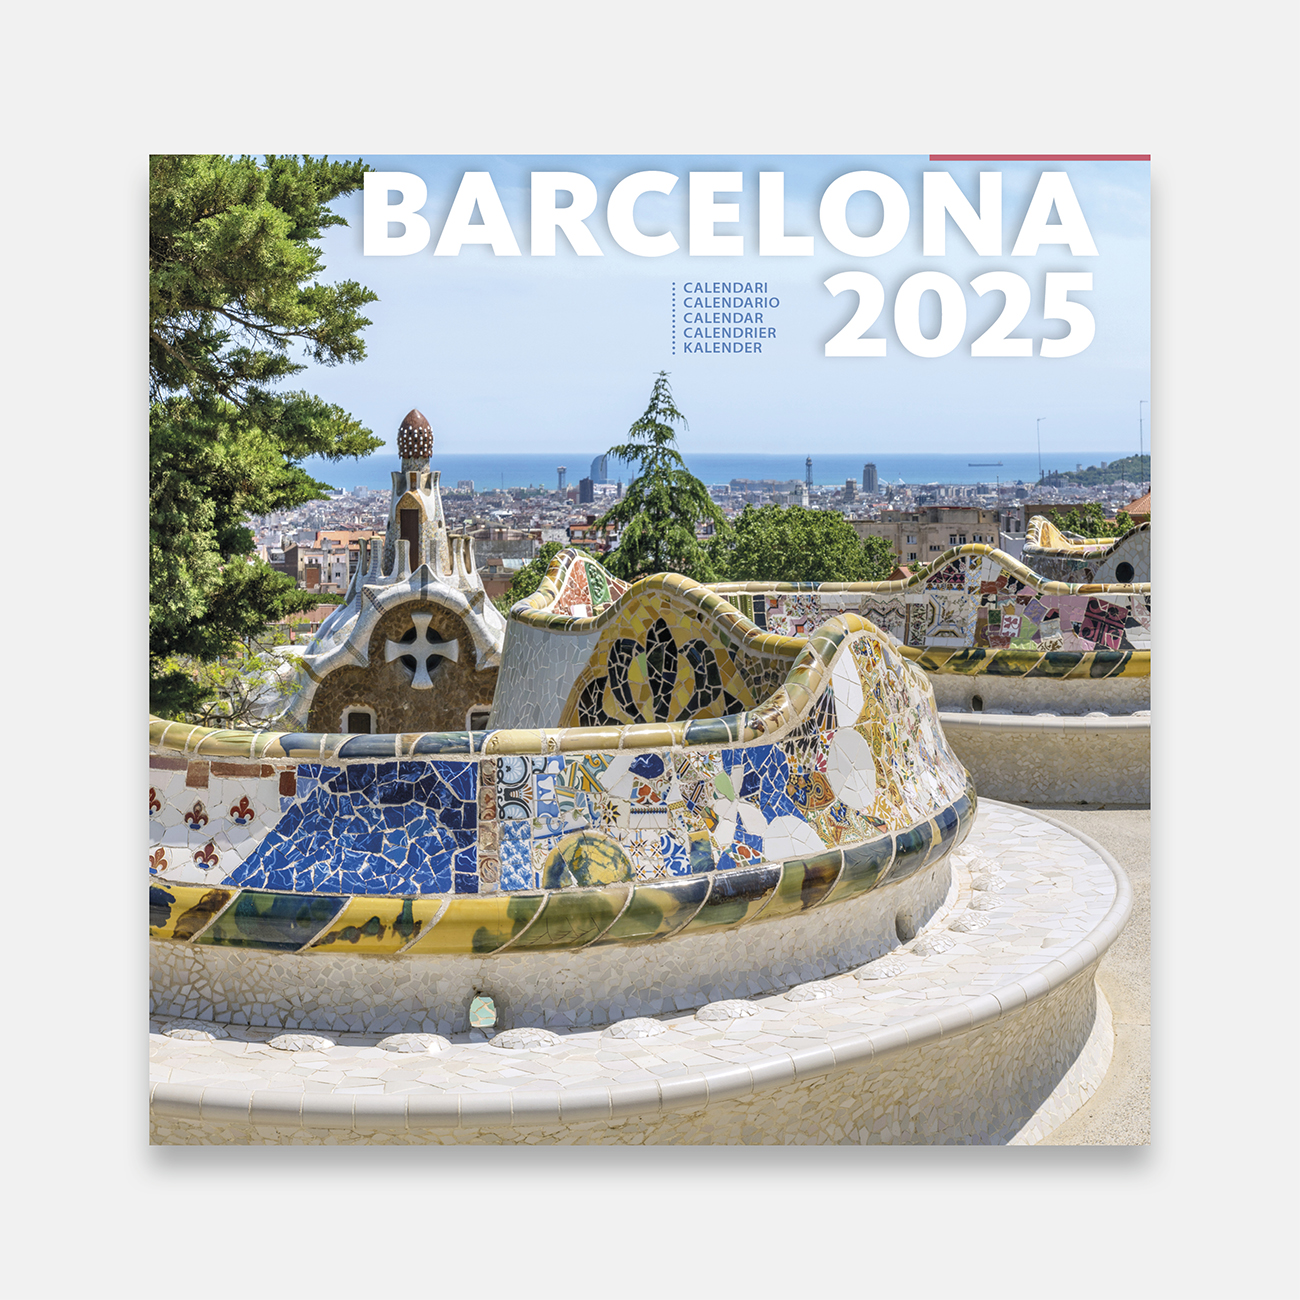 Calendrier 2025 Barcelone 25b2 calendario pared 2025 barcelona